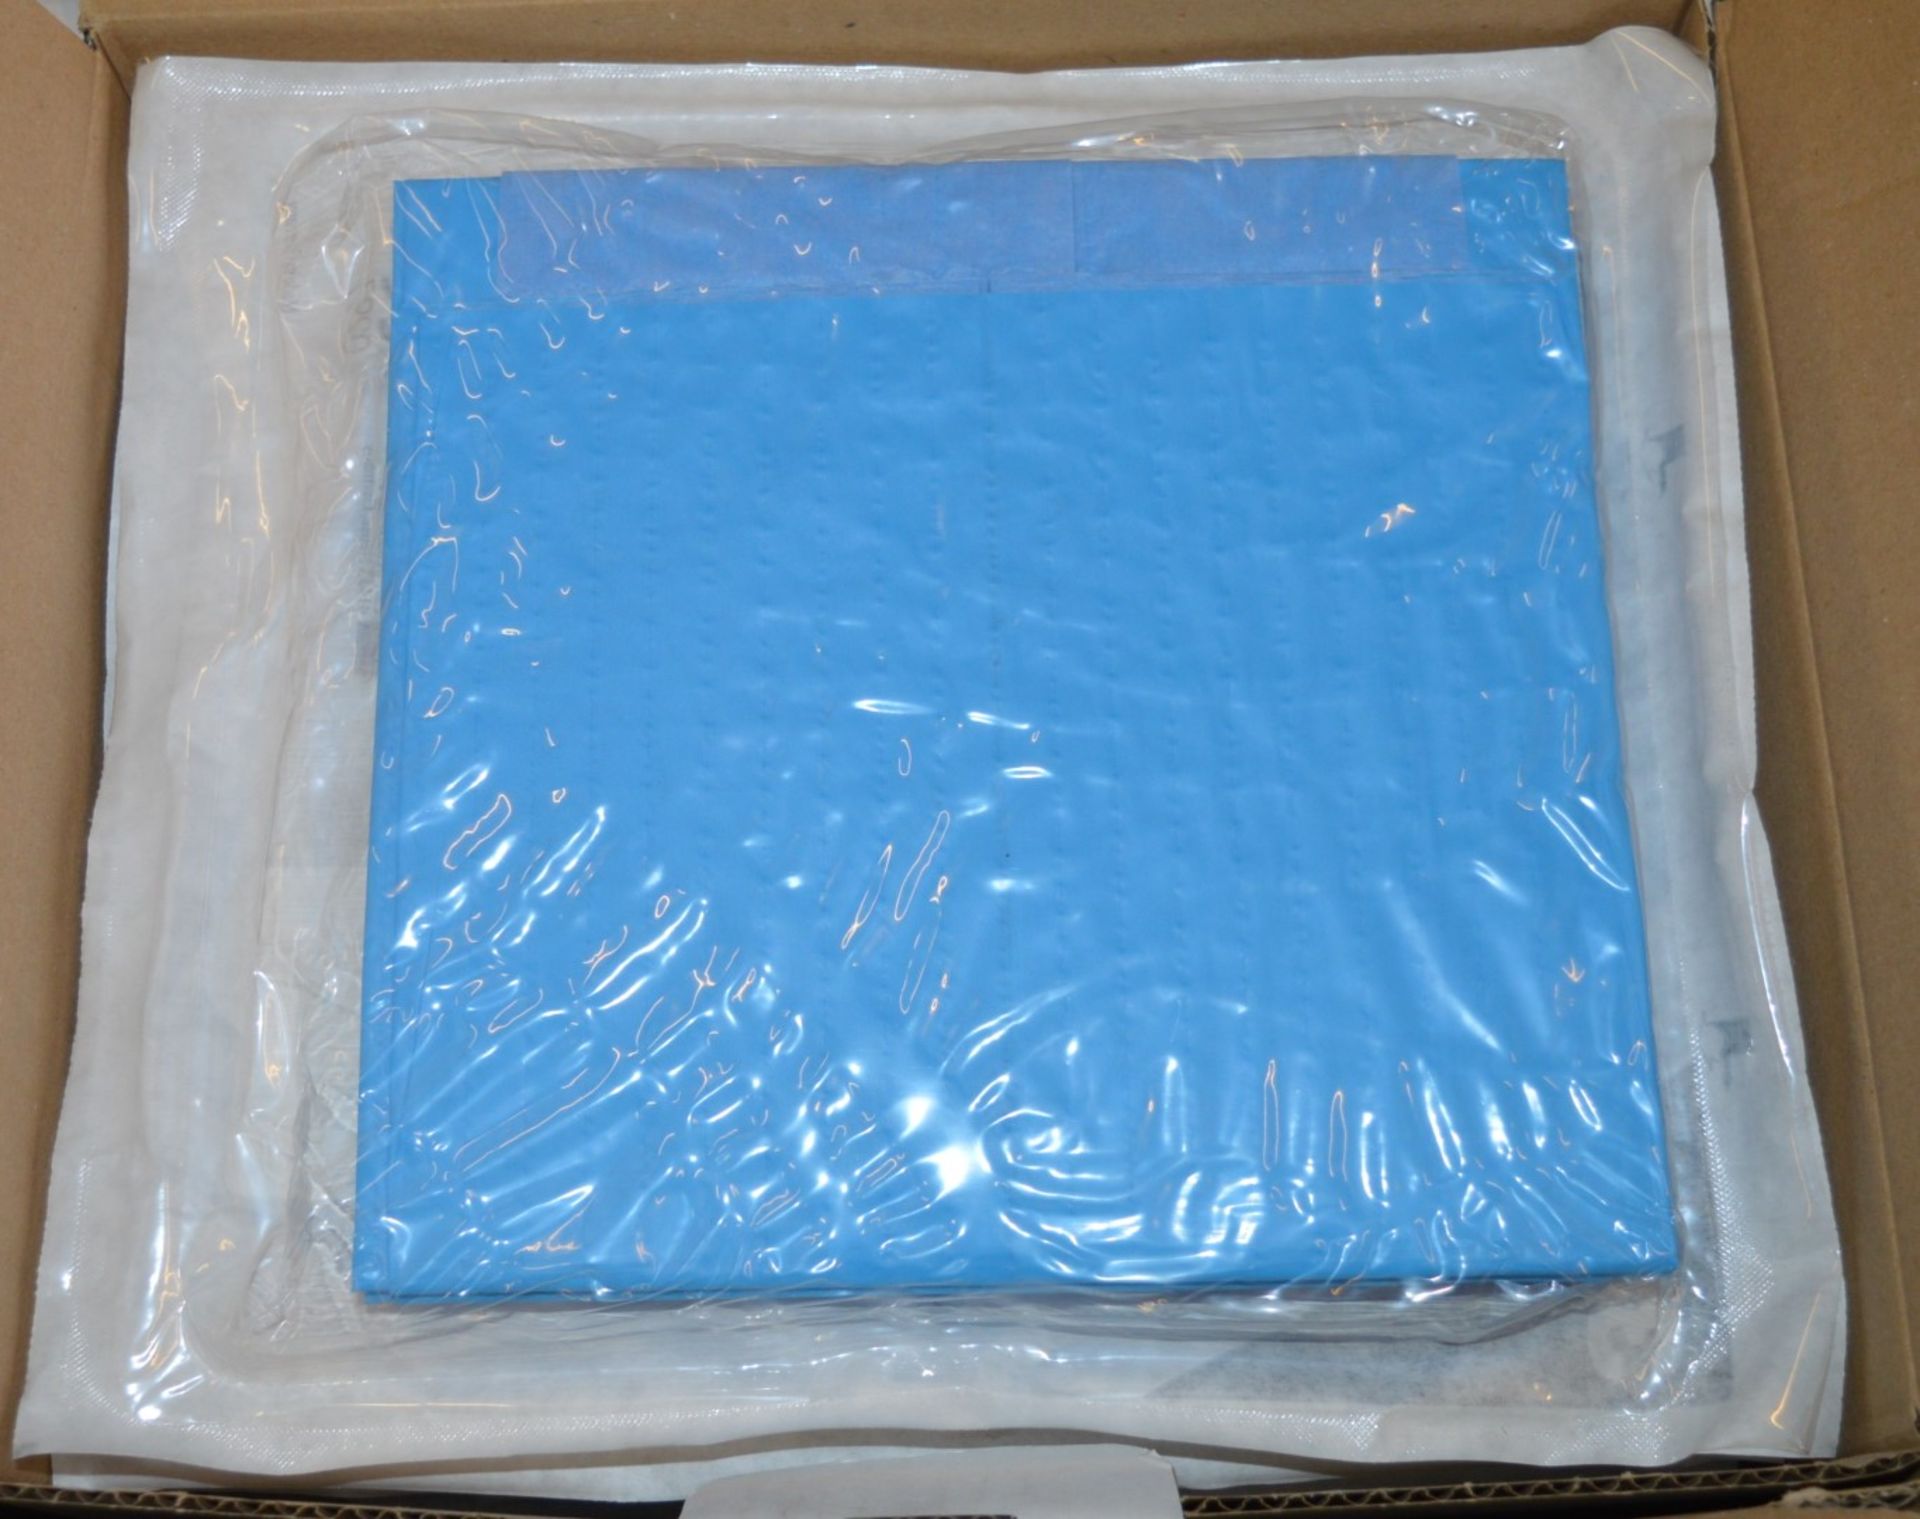 15 x 3M Steri-Drape Sheet Instrumental Table Covers - Product Code 9077E - Size 200x150cm - Brand